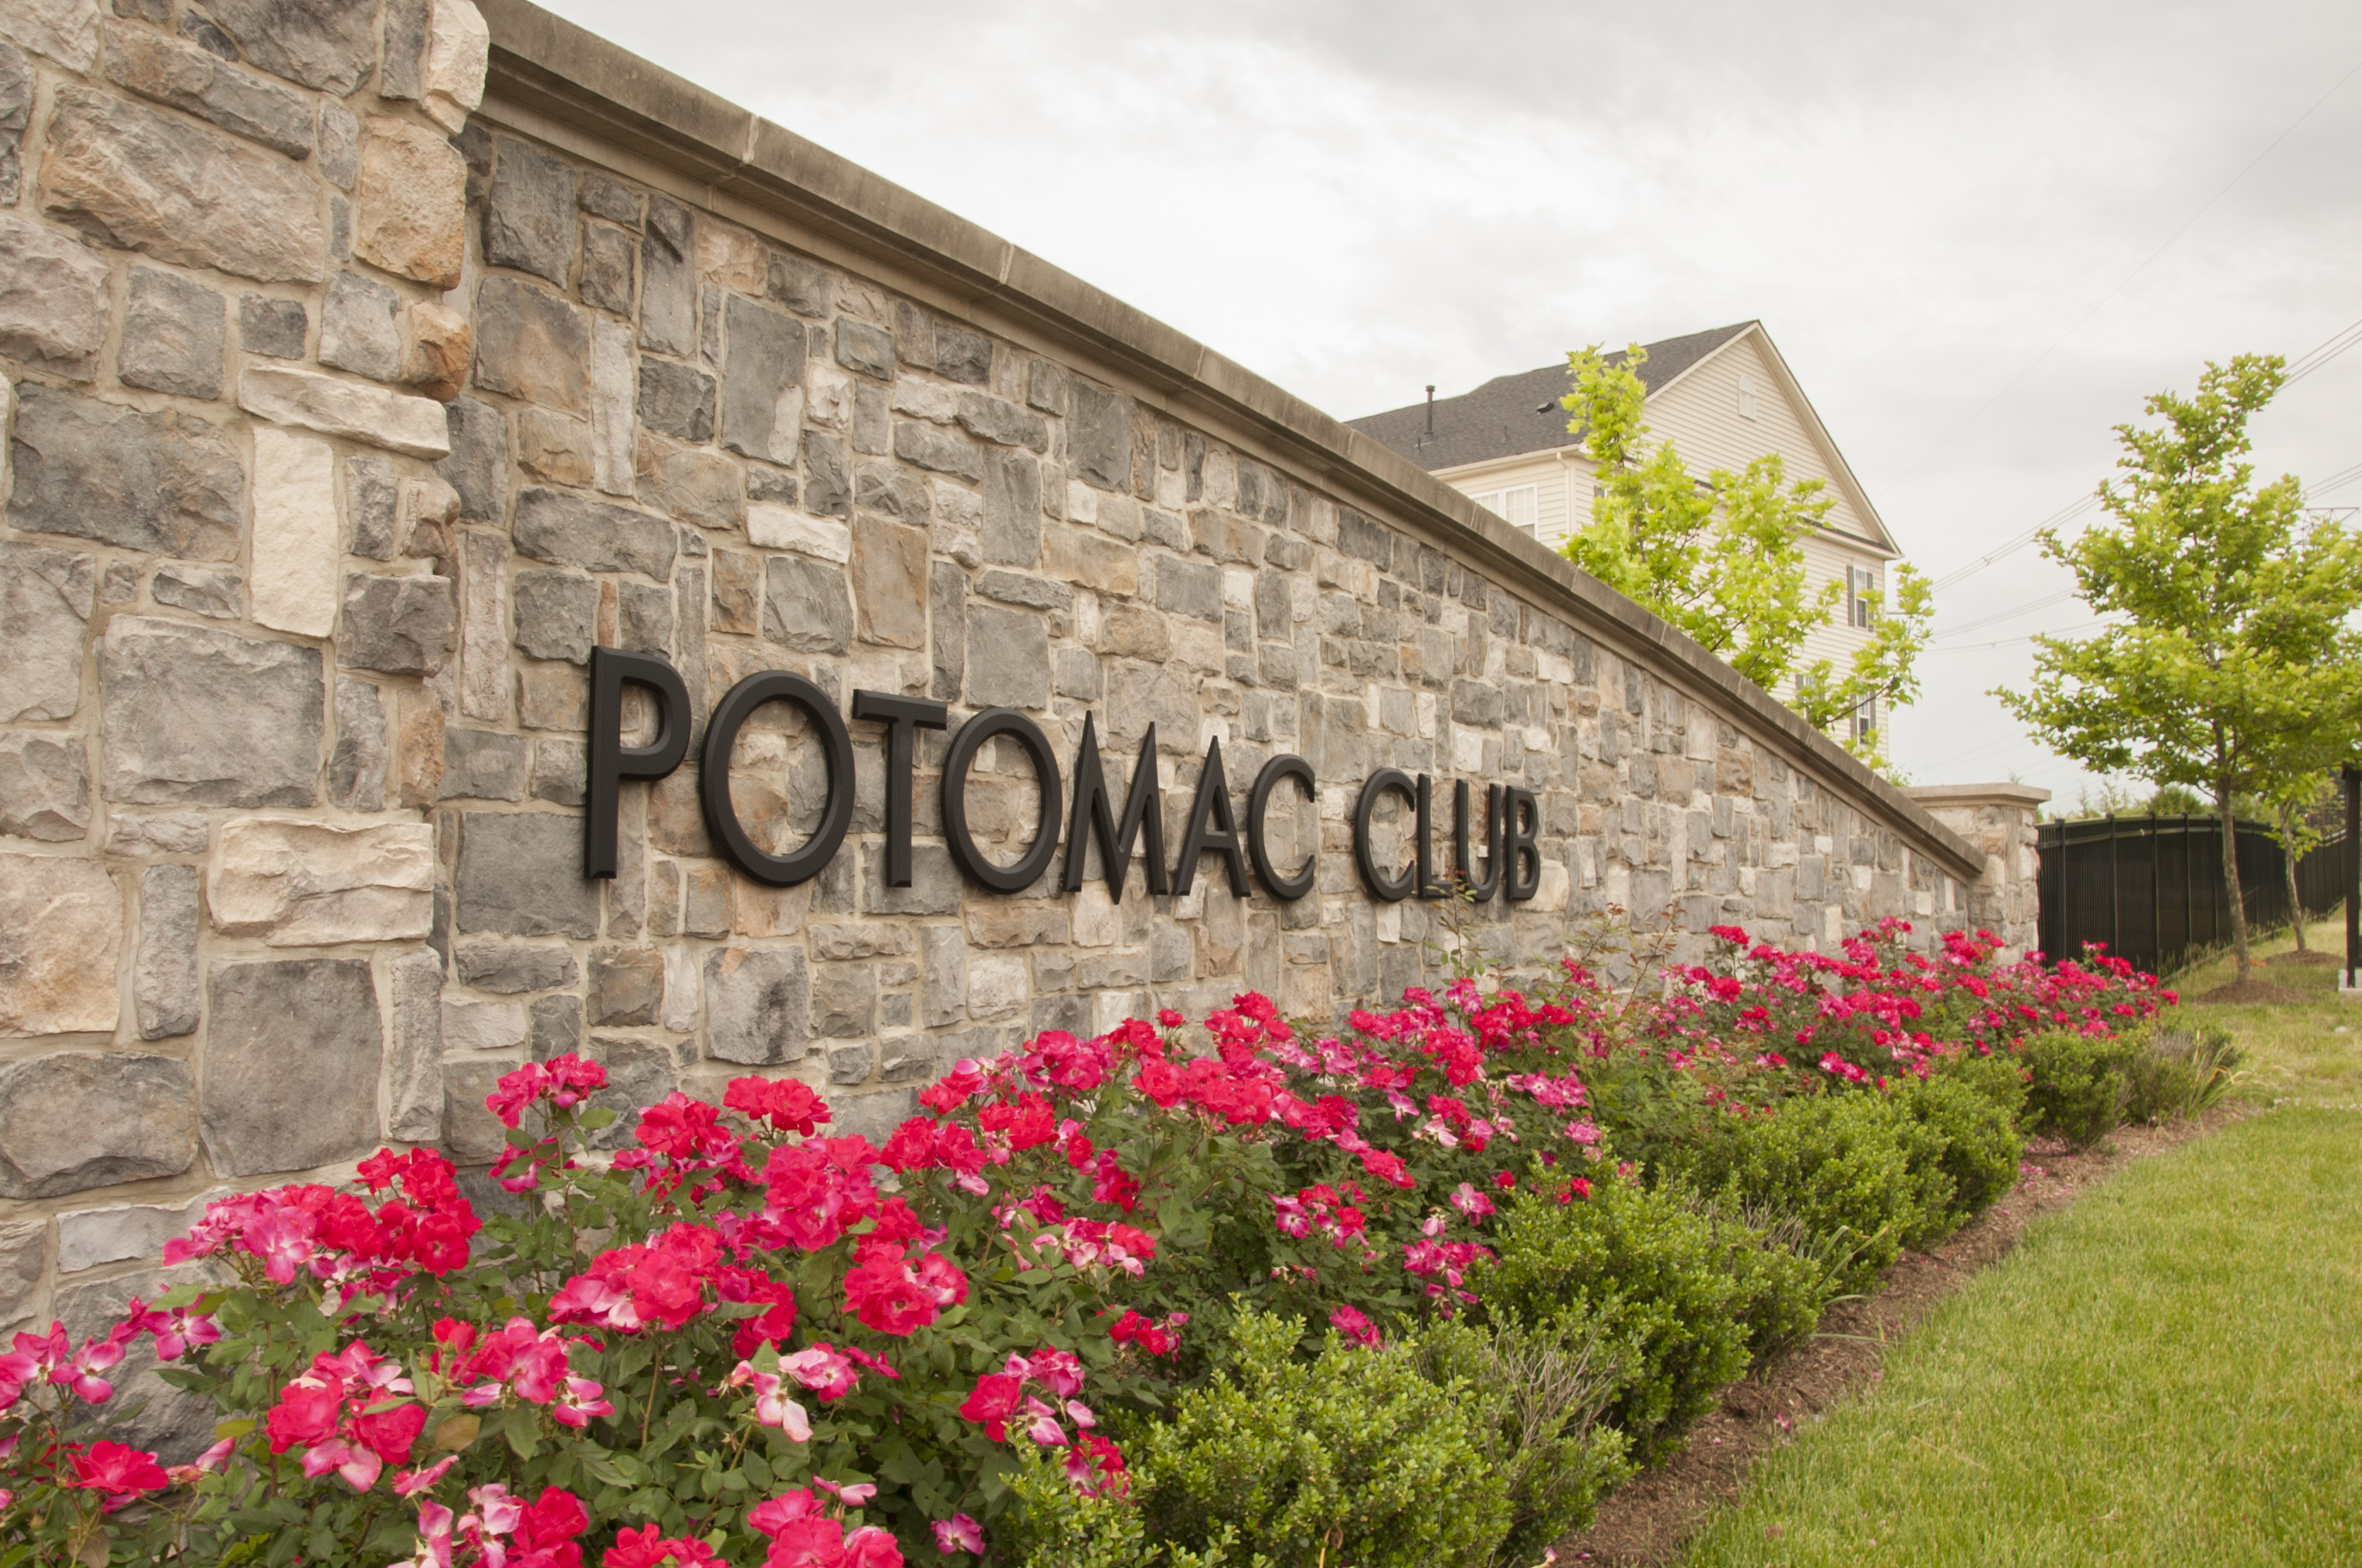 Potomac Club Open House Extravaganza